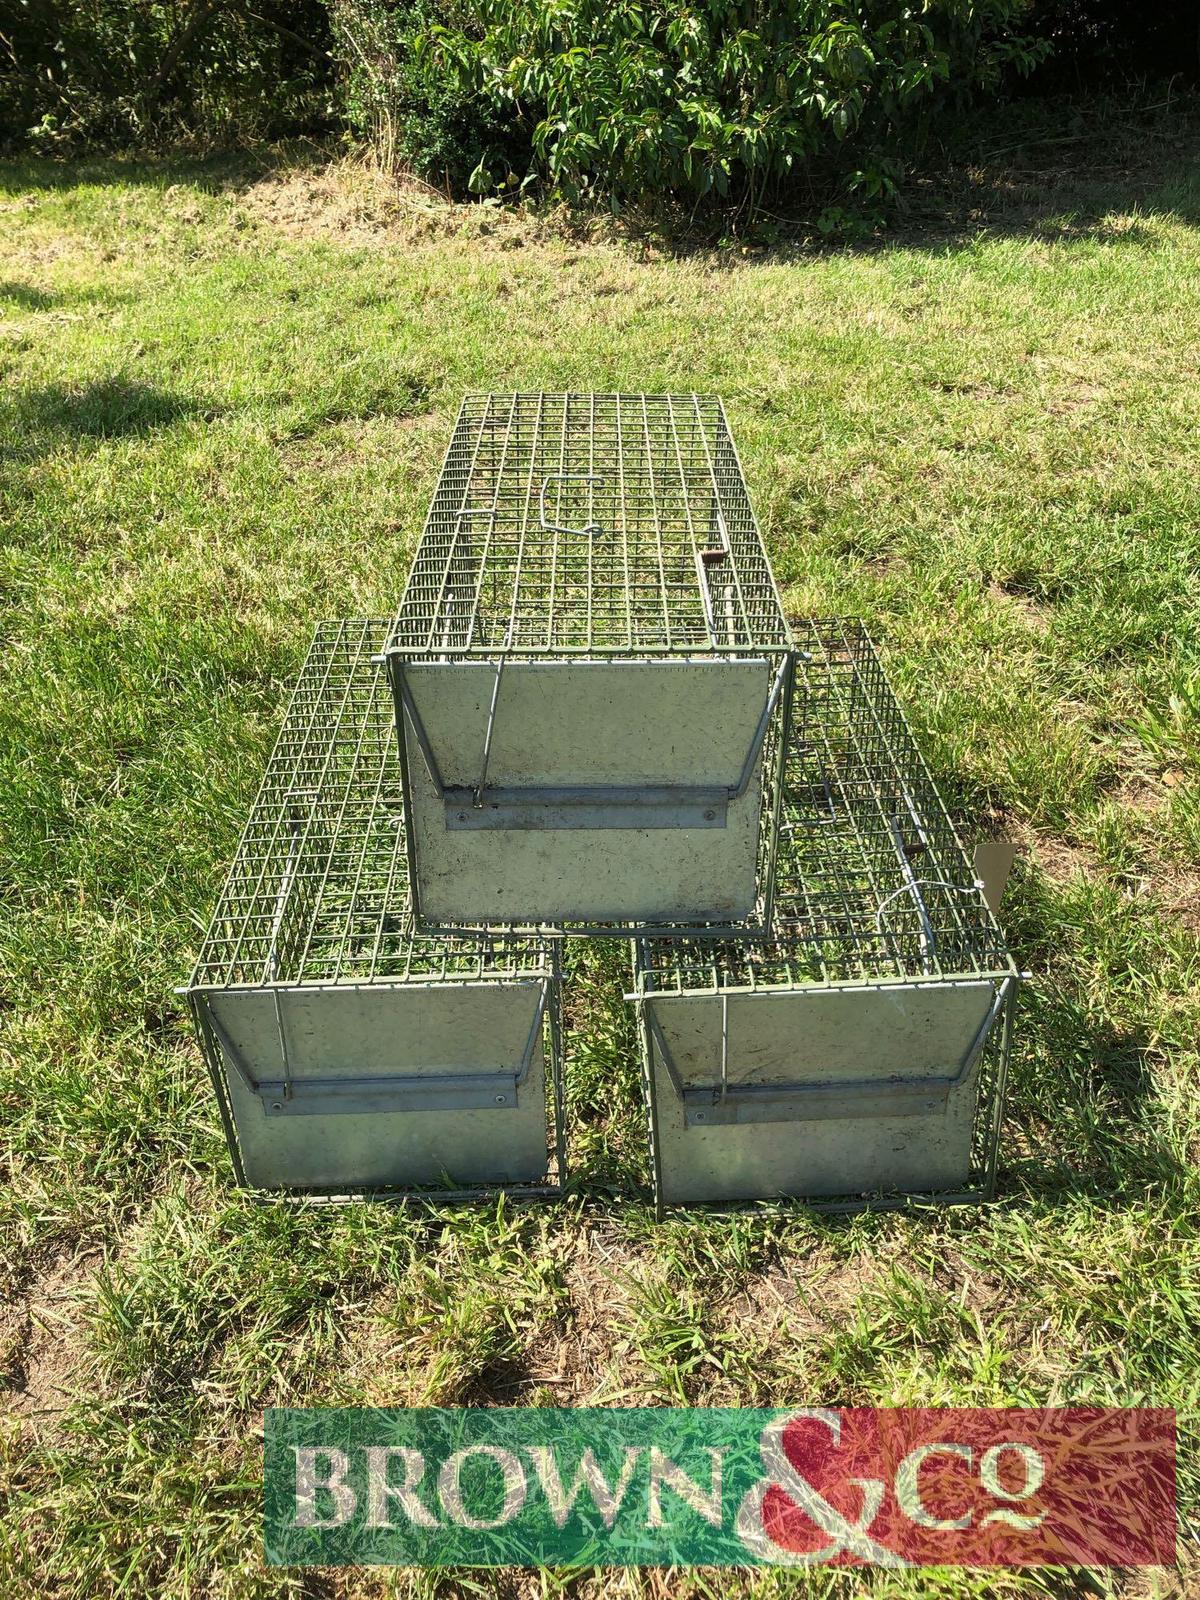 Quantity rabbit traps